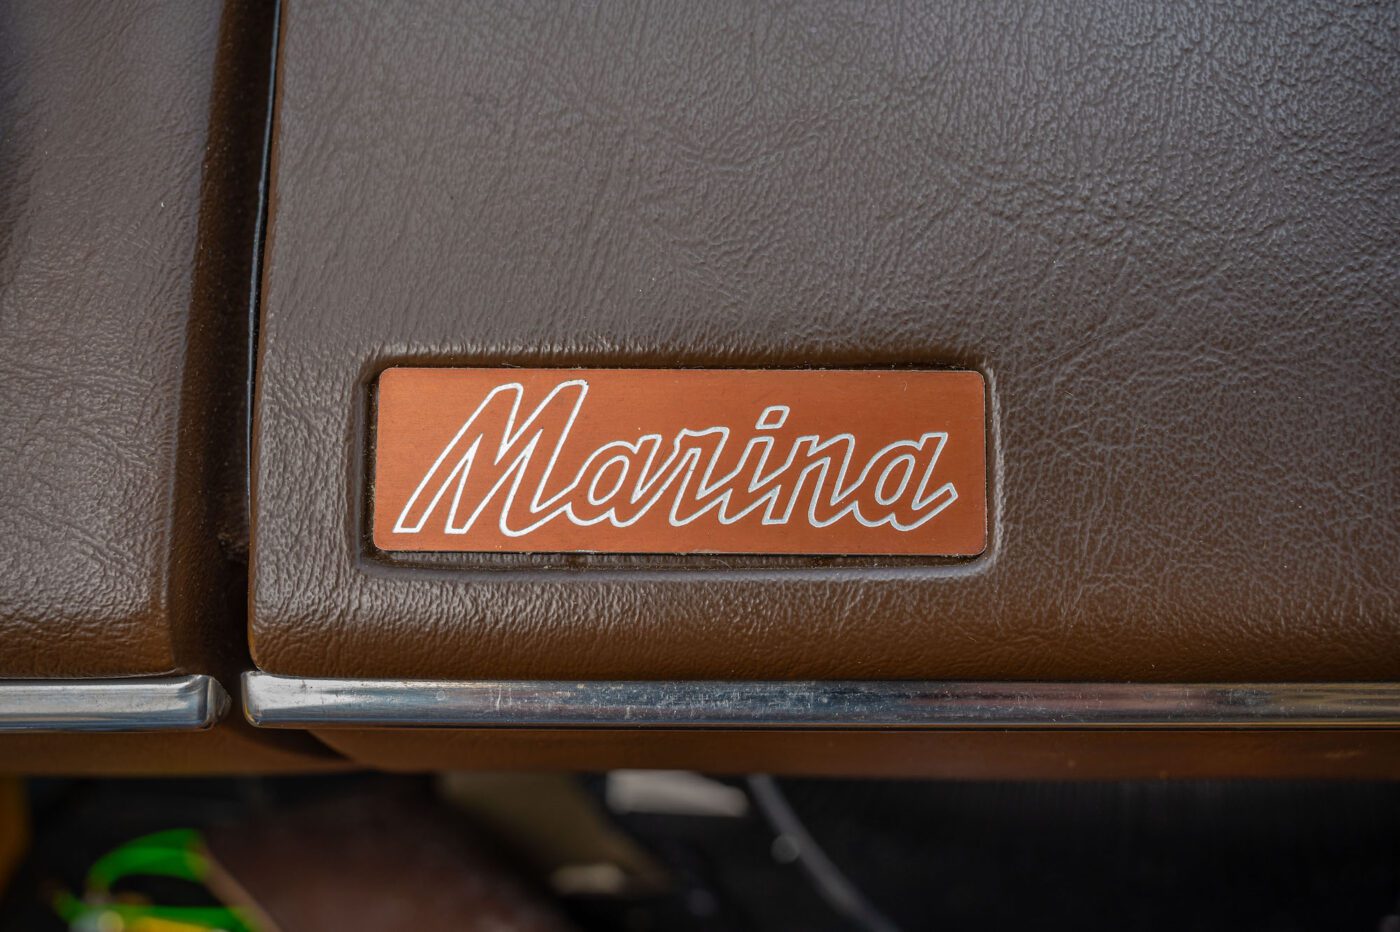 Morris Marina glovebox